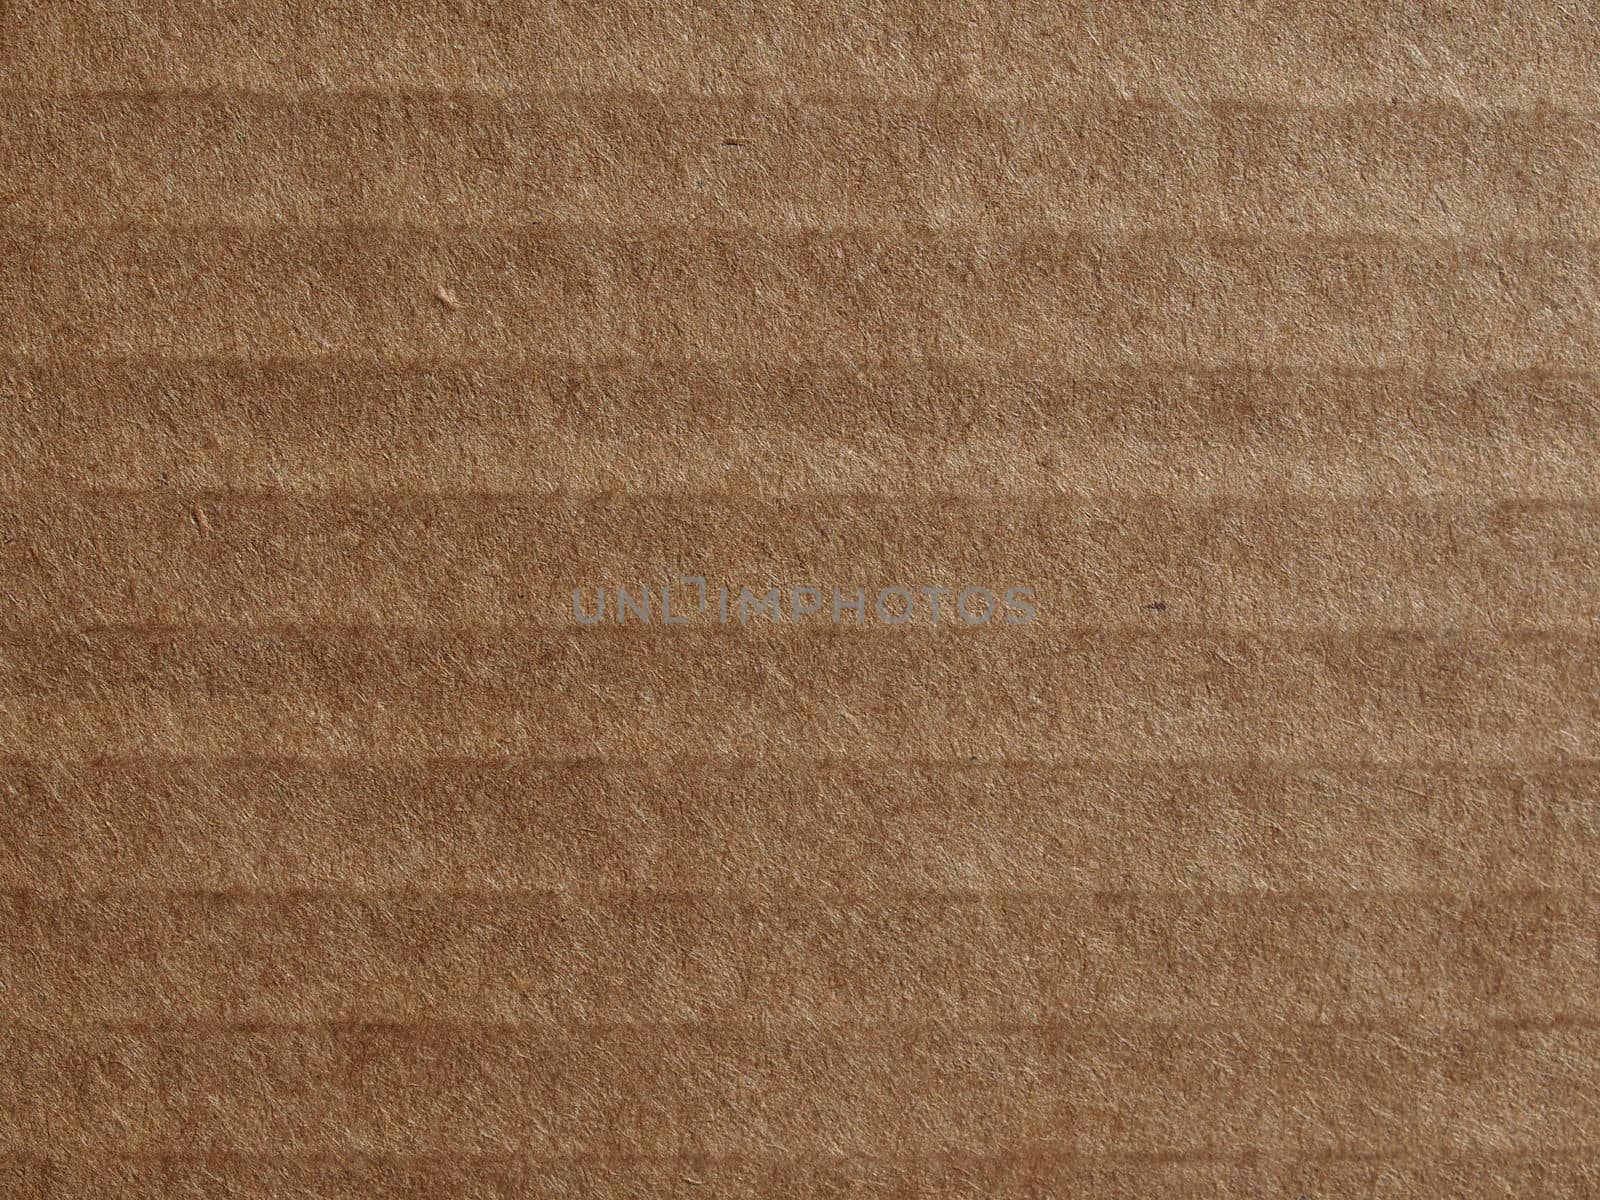 corrugated cardboard useful as a background